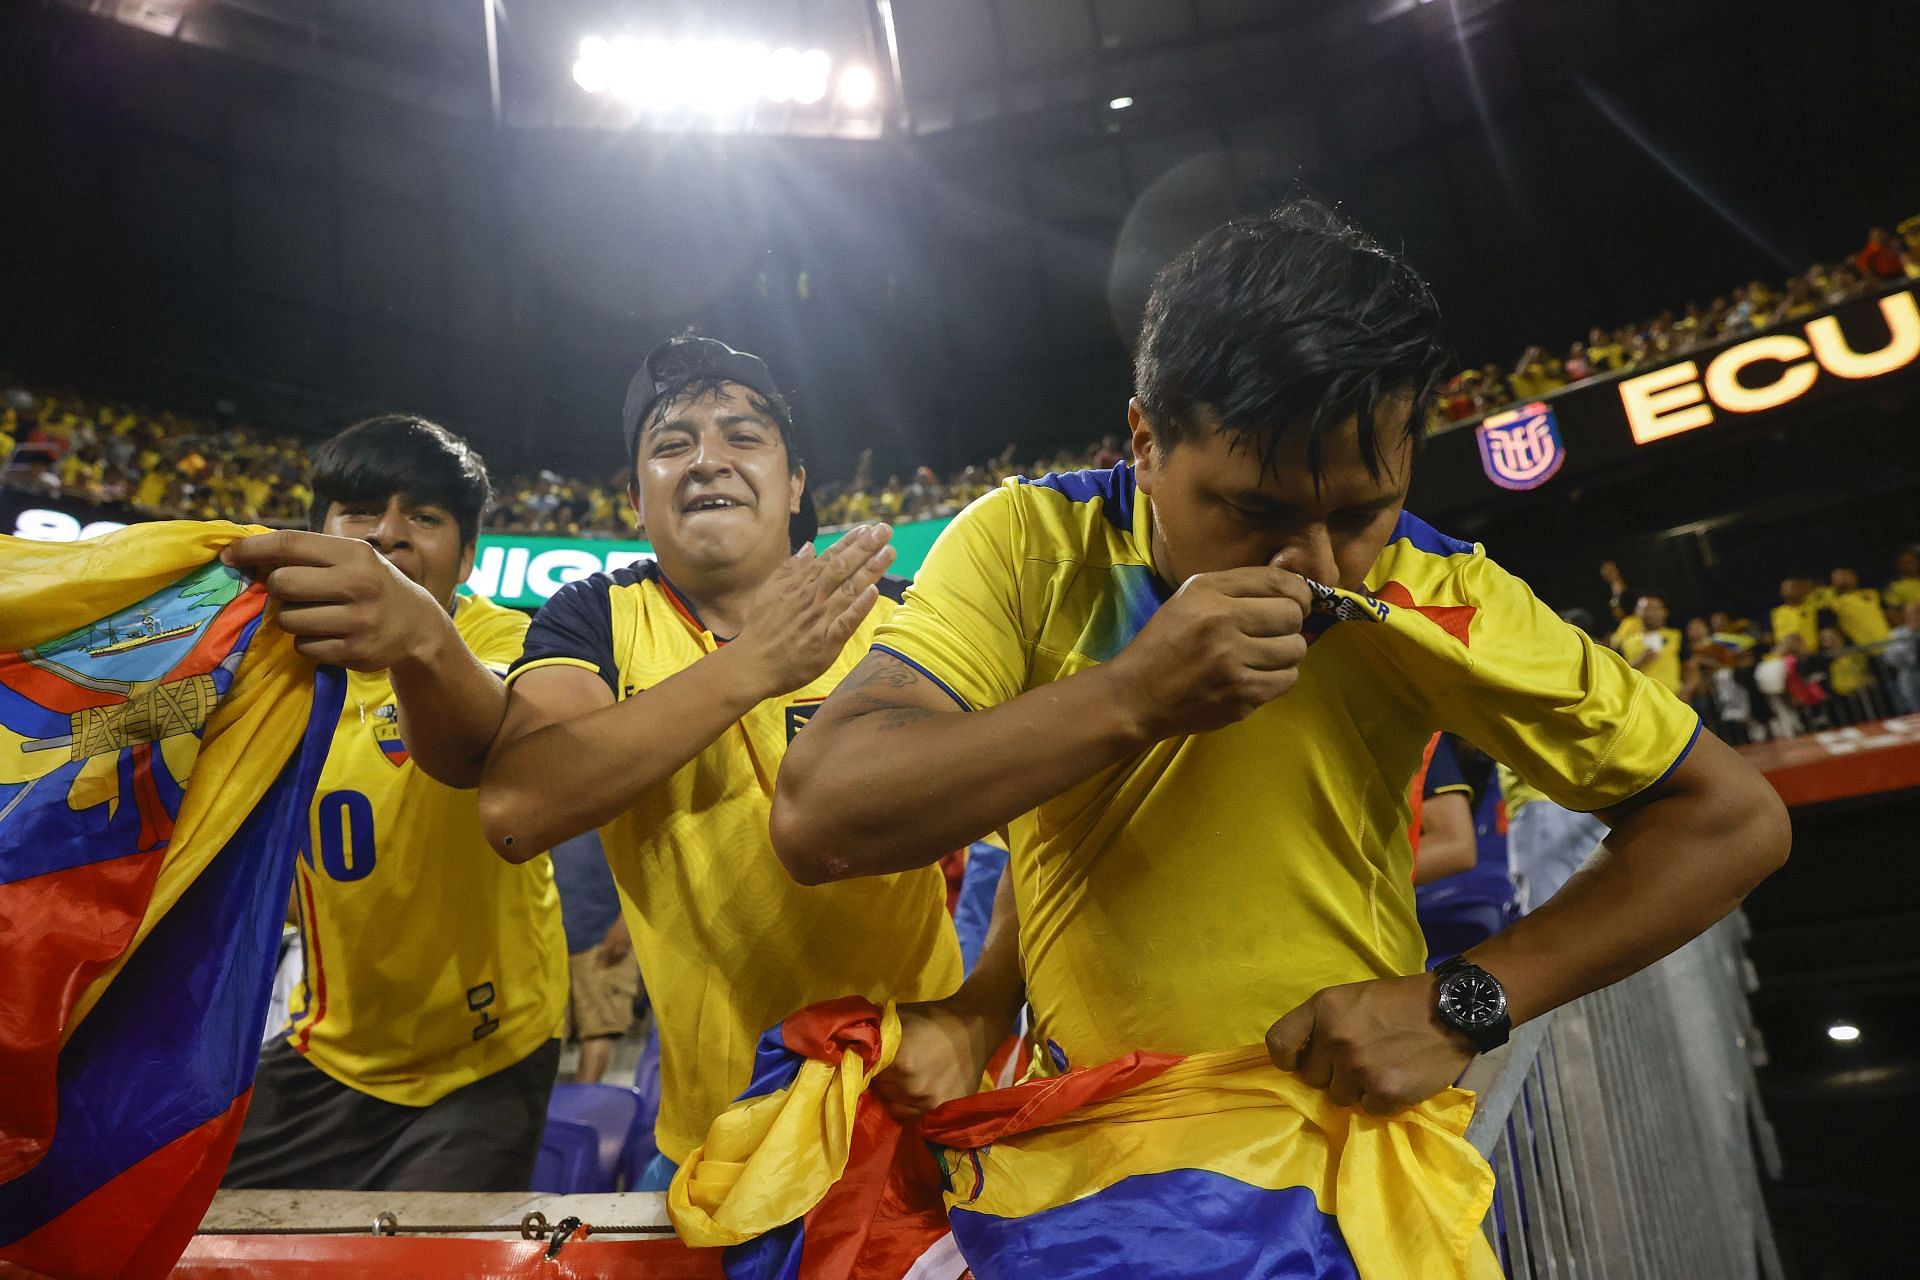 Ecuador will face Cape Verde in a friendly game on Saturday